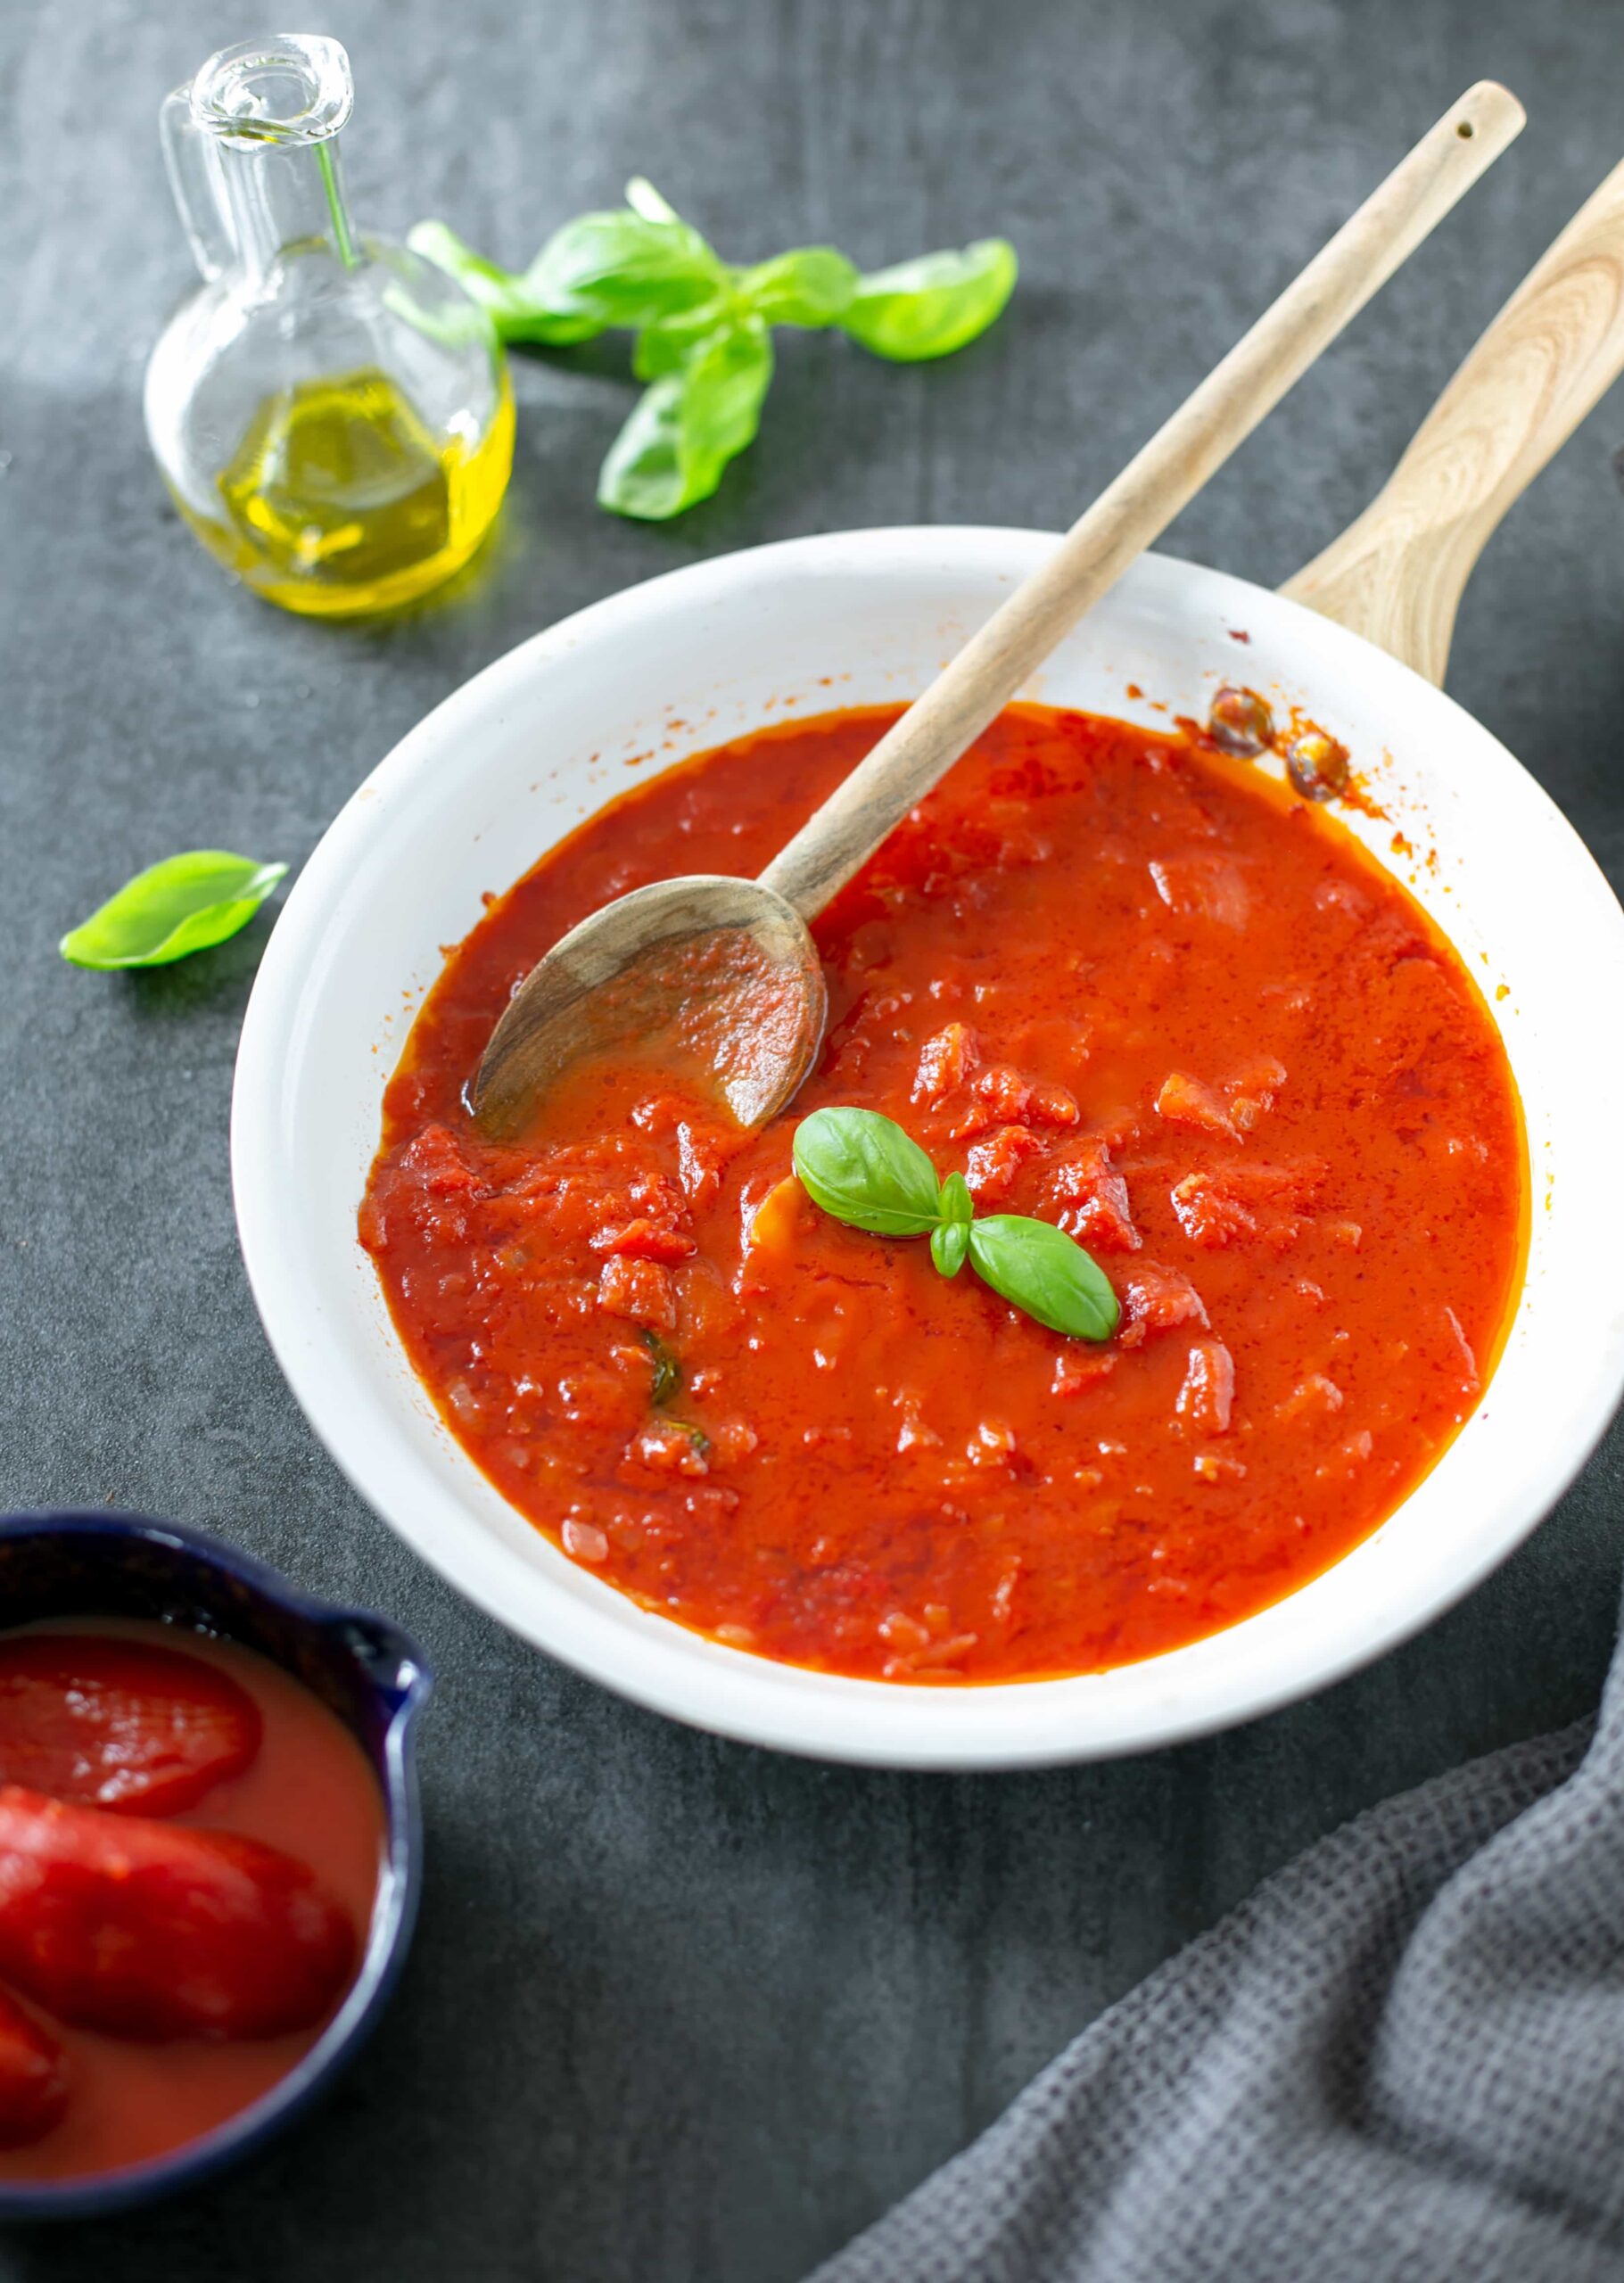 https://www.thepetitecook.com/wp-content/uploads/2019/05/italian-tomato-sauce-recipe-scaled.jpg